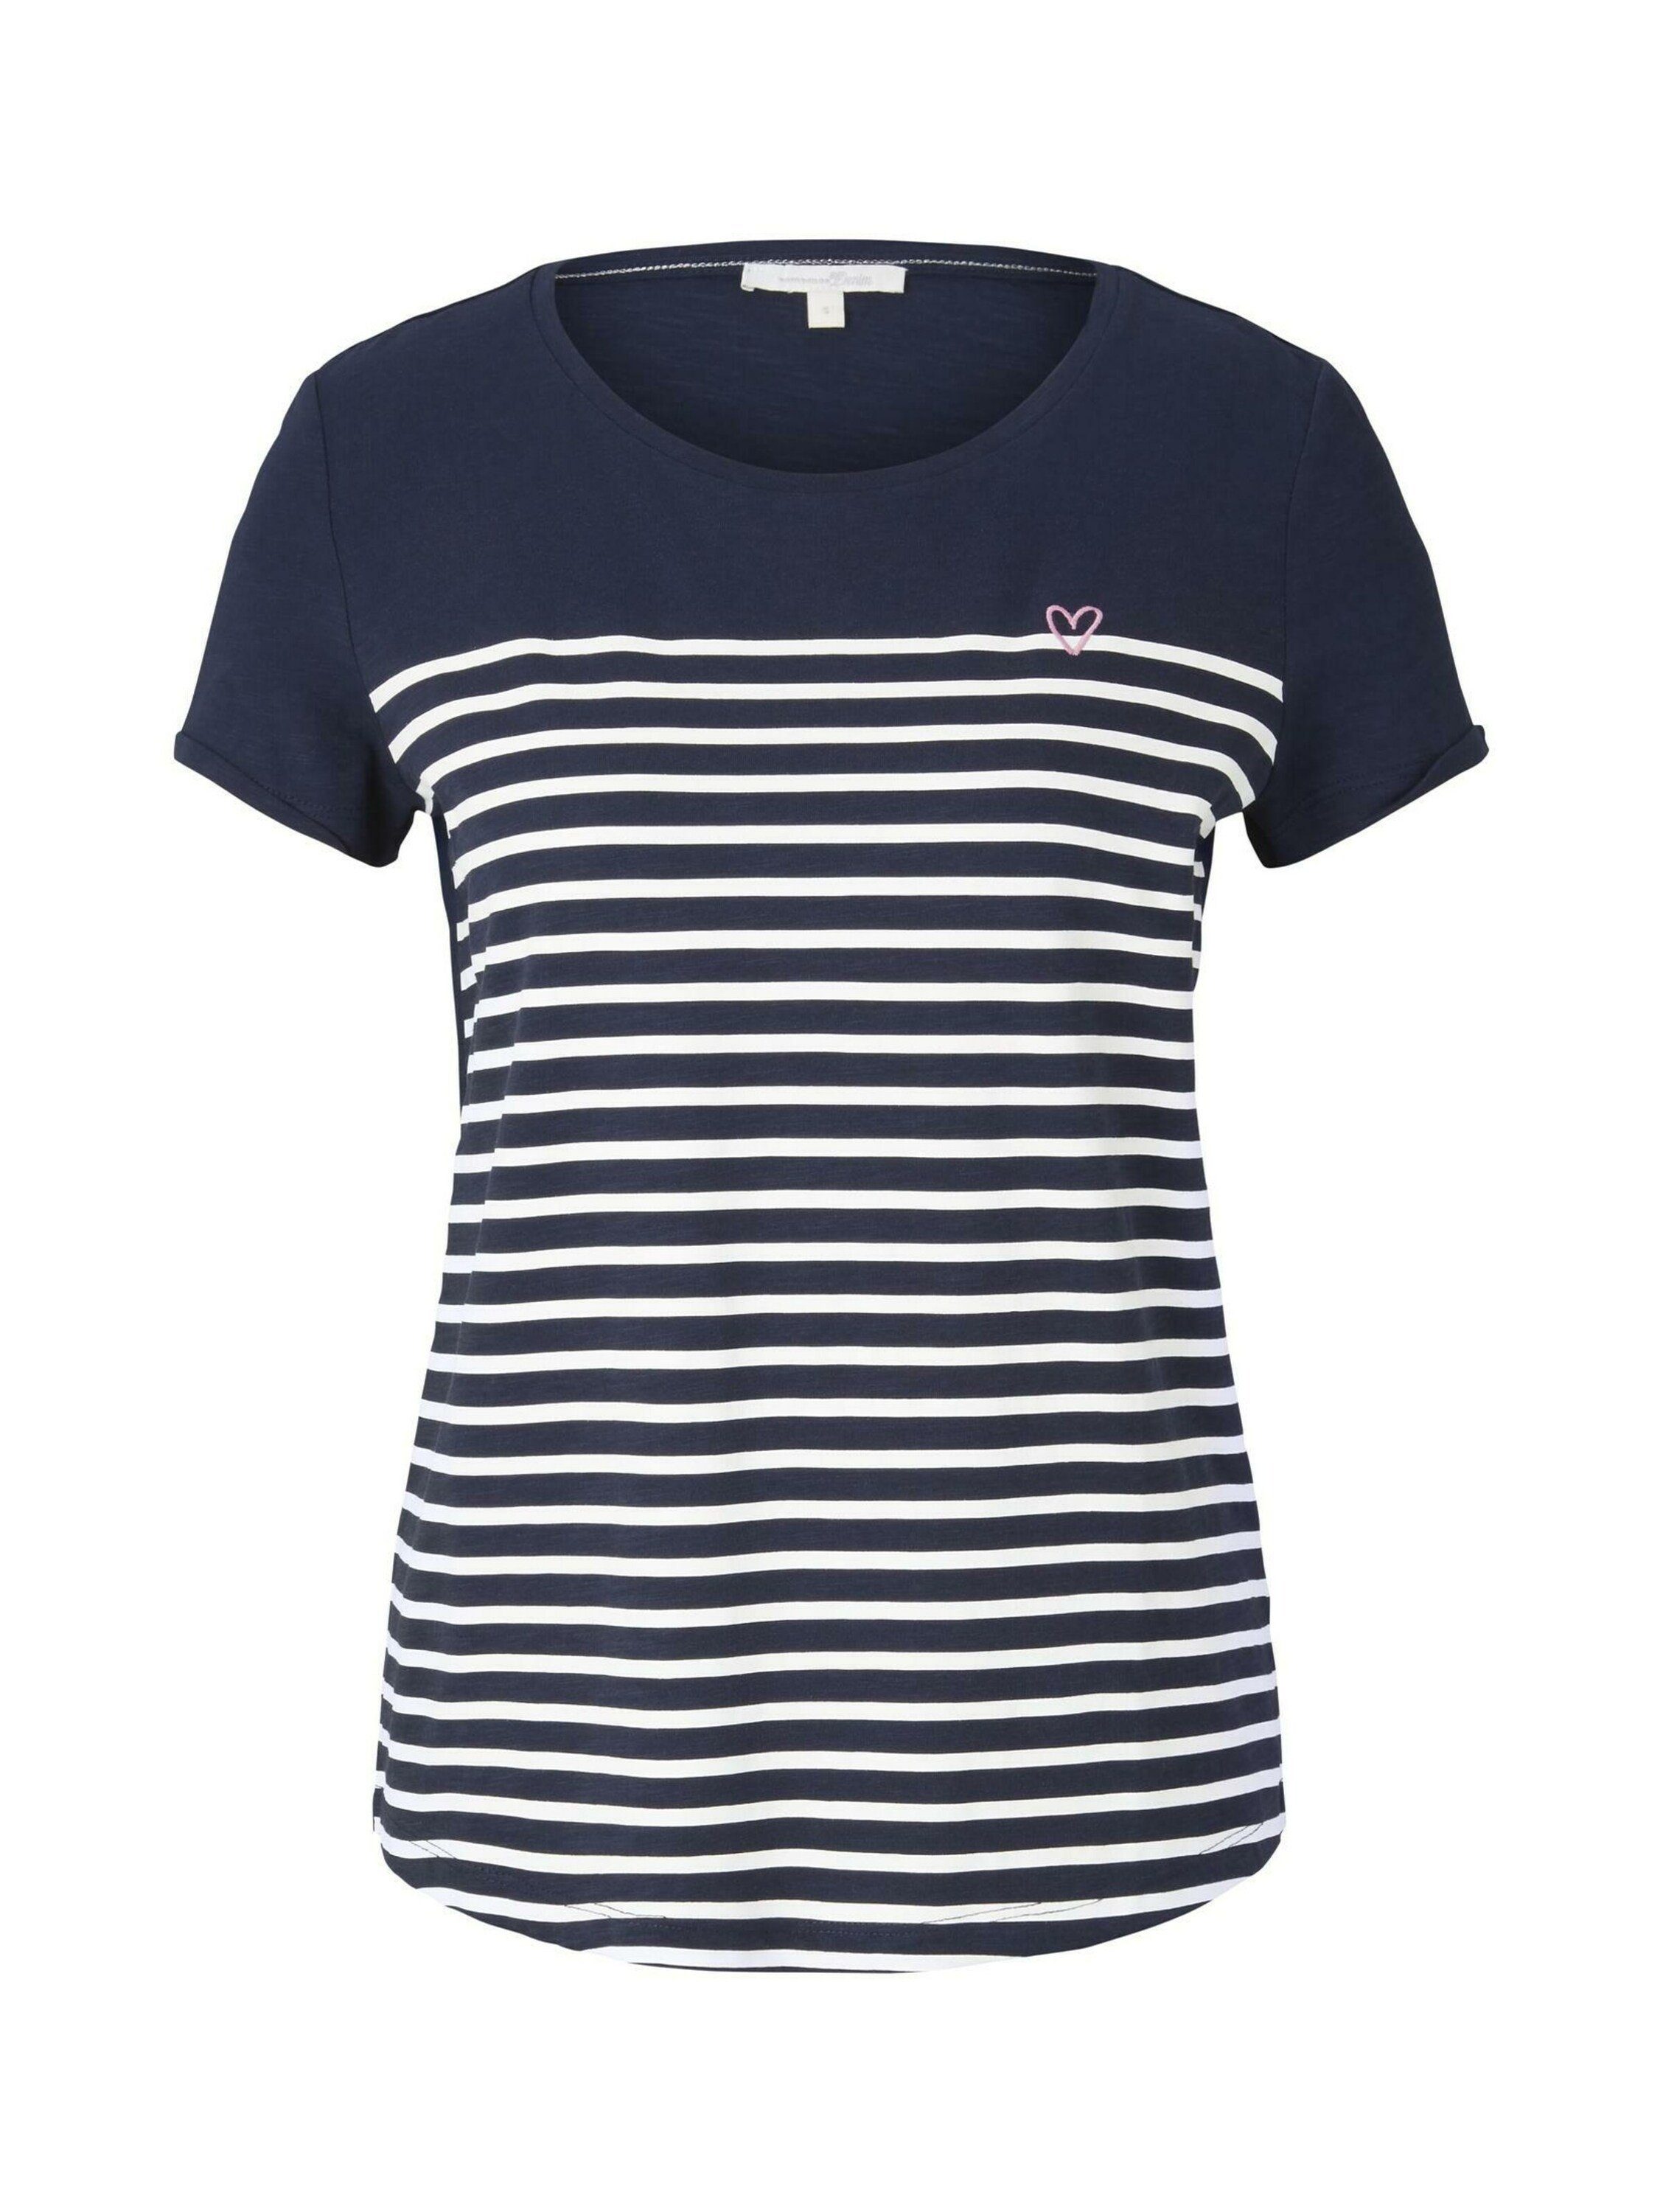 TOM TAILOR Denim T-Shirt (1-tlg) Stickerei, Plain/ohne Details navy off white stripe